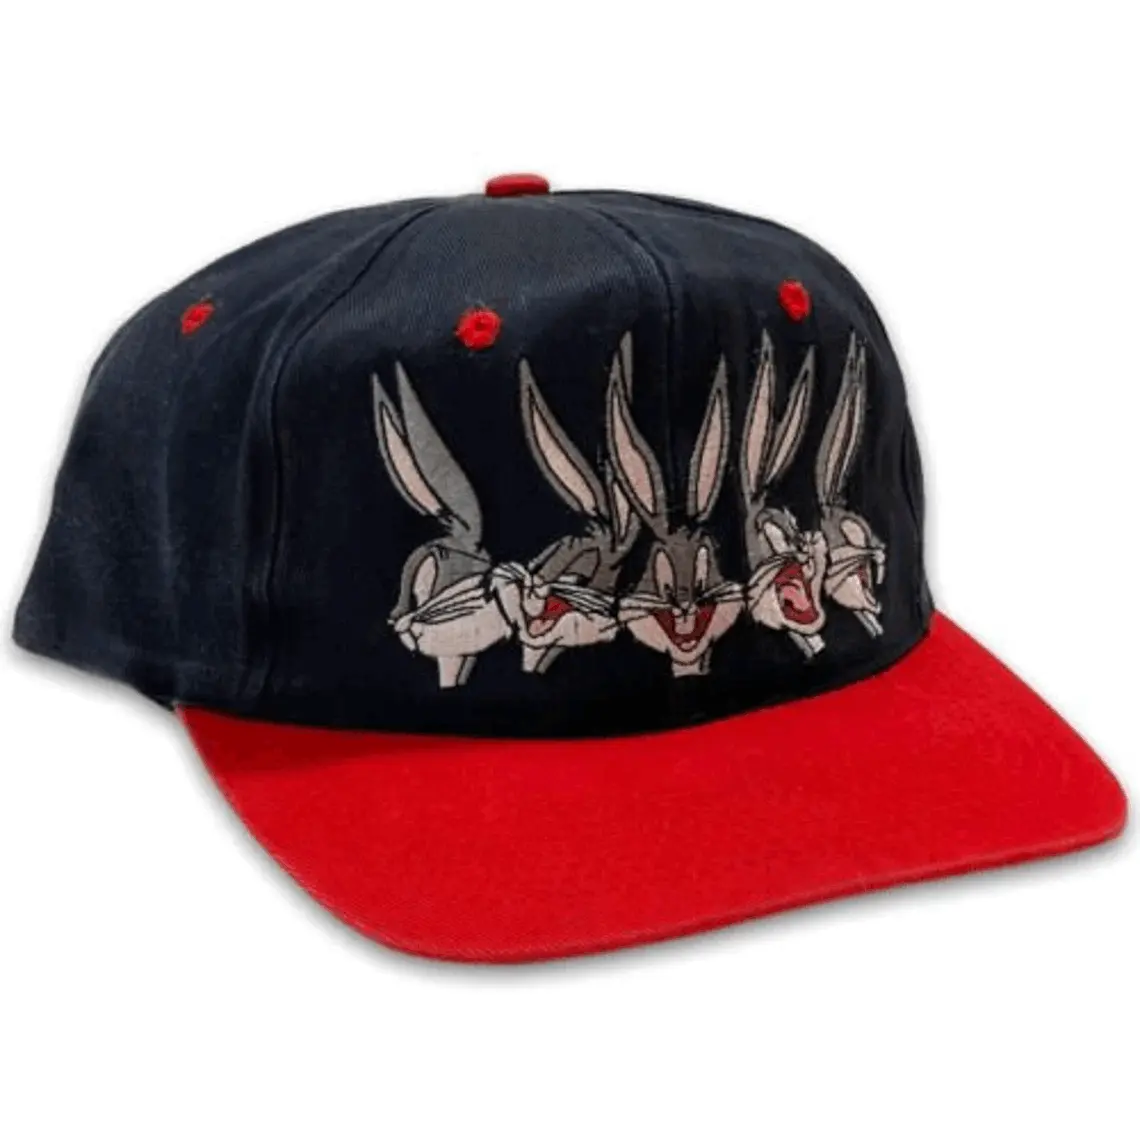 Vintage Design Embroidered Snapback Hat Adult Unisex 1990s Baseball Hats High Quality Adjustable Trucker Hats INJAE VINA